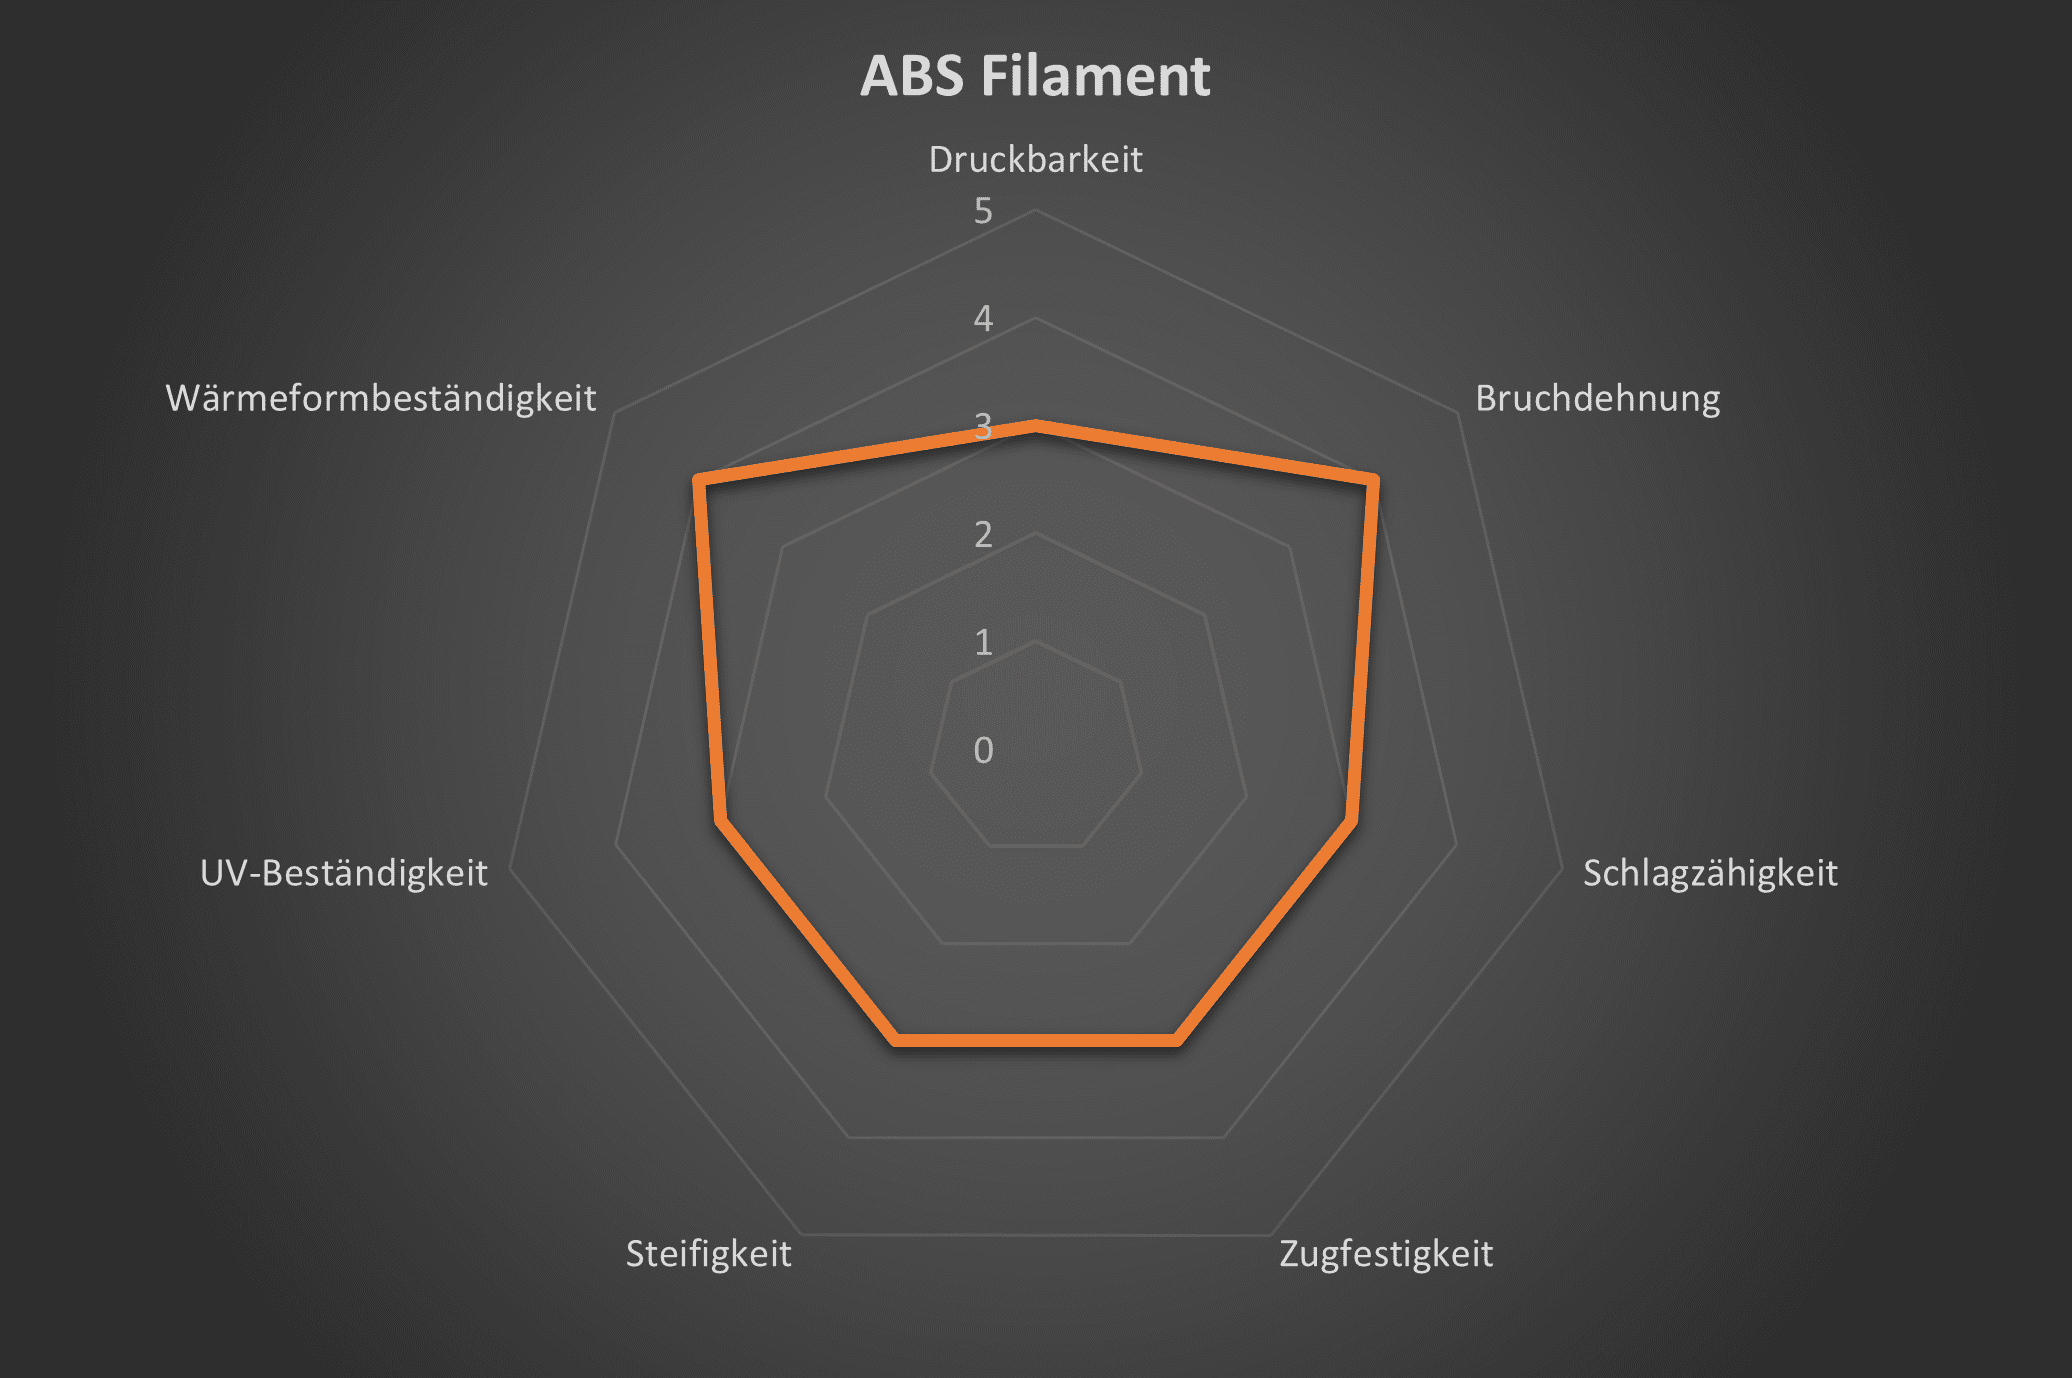 Spinnendiagramm ABS Filament